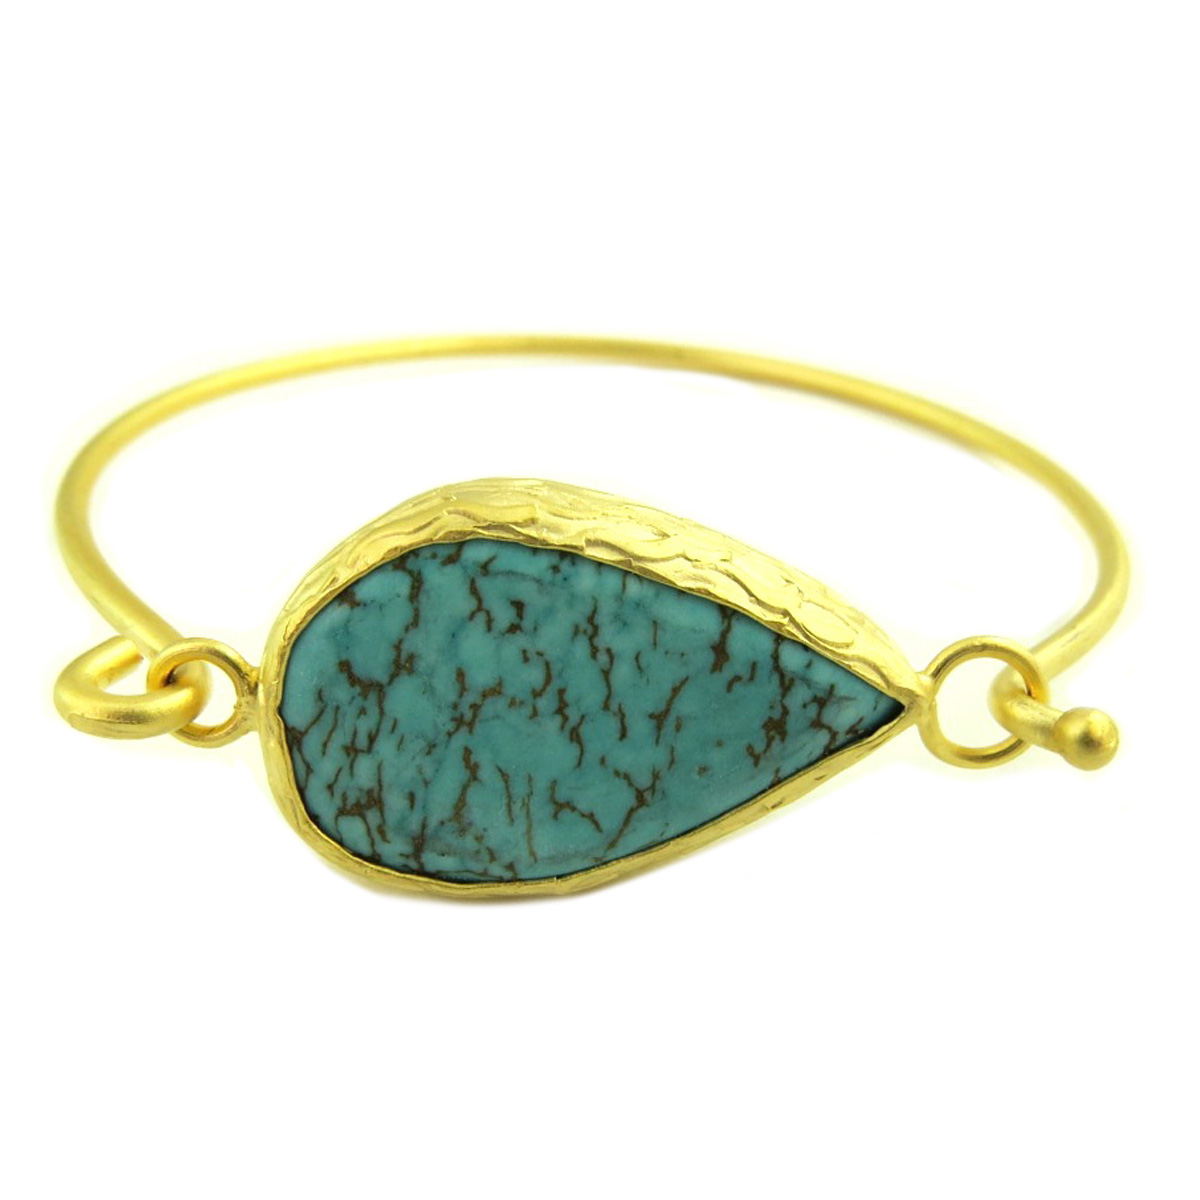 Bracelet artisanal \'Cléopatra\' turquoise doré - 56 mm 25x20 mm - [Q9826]